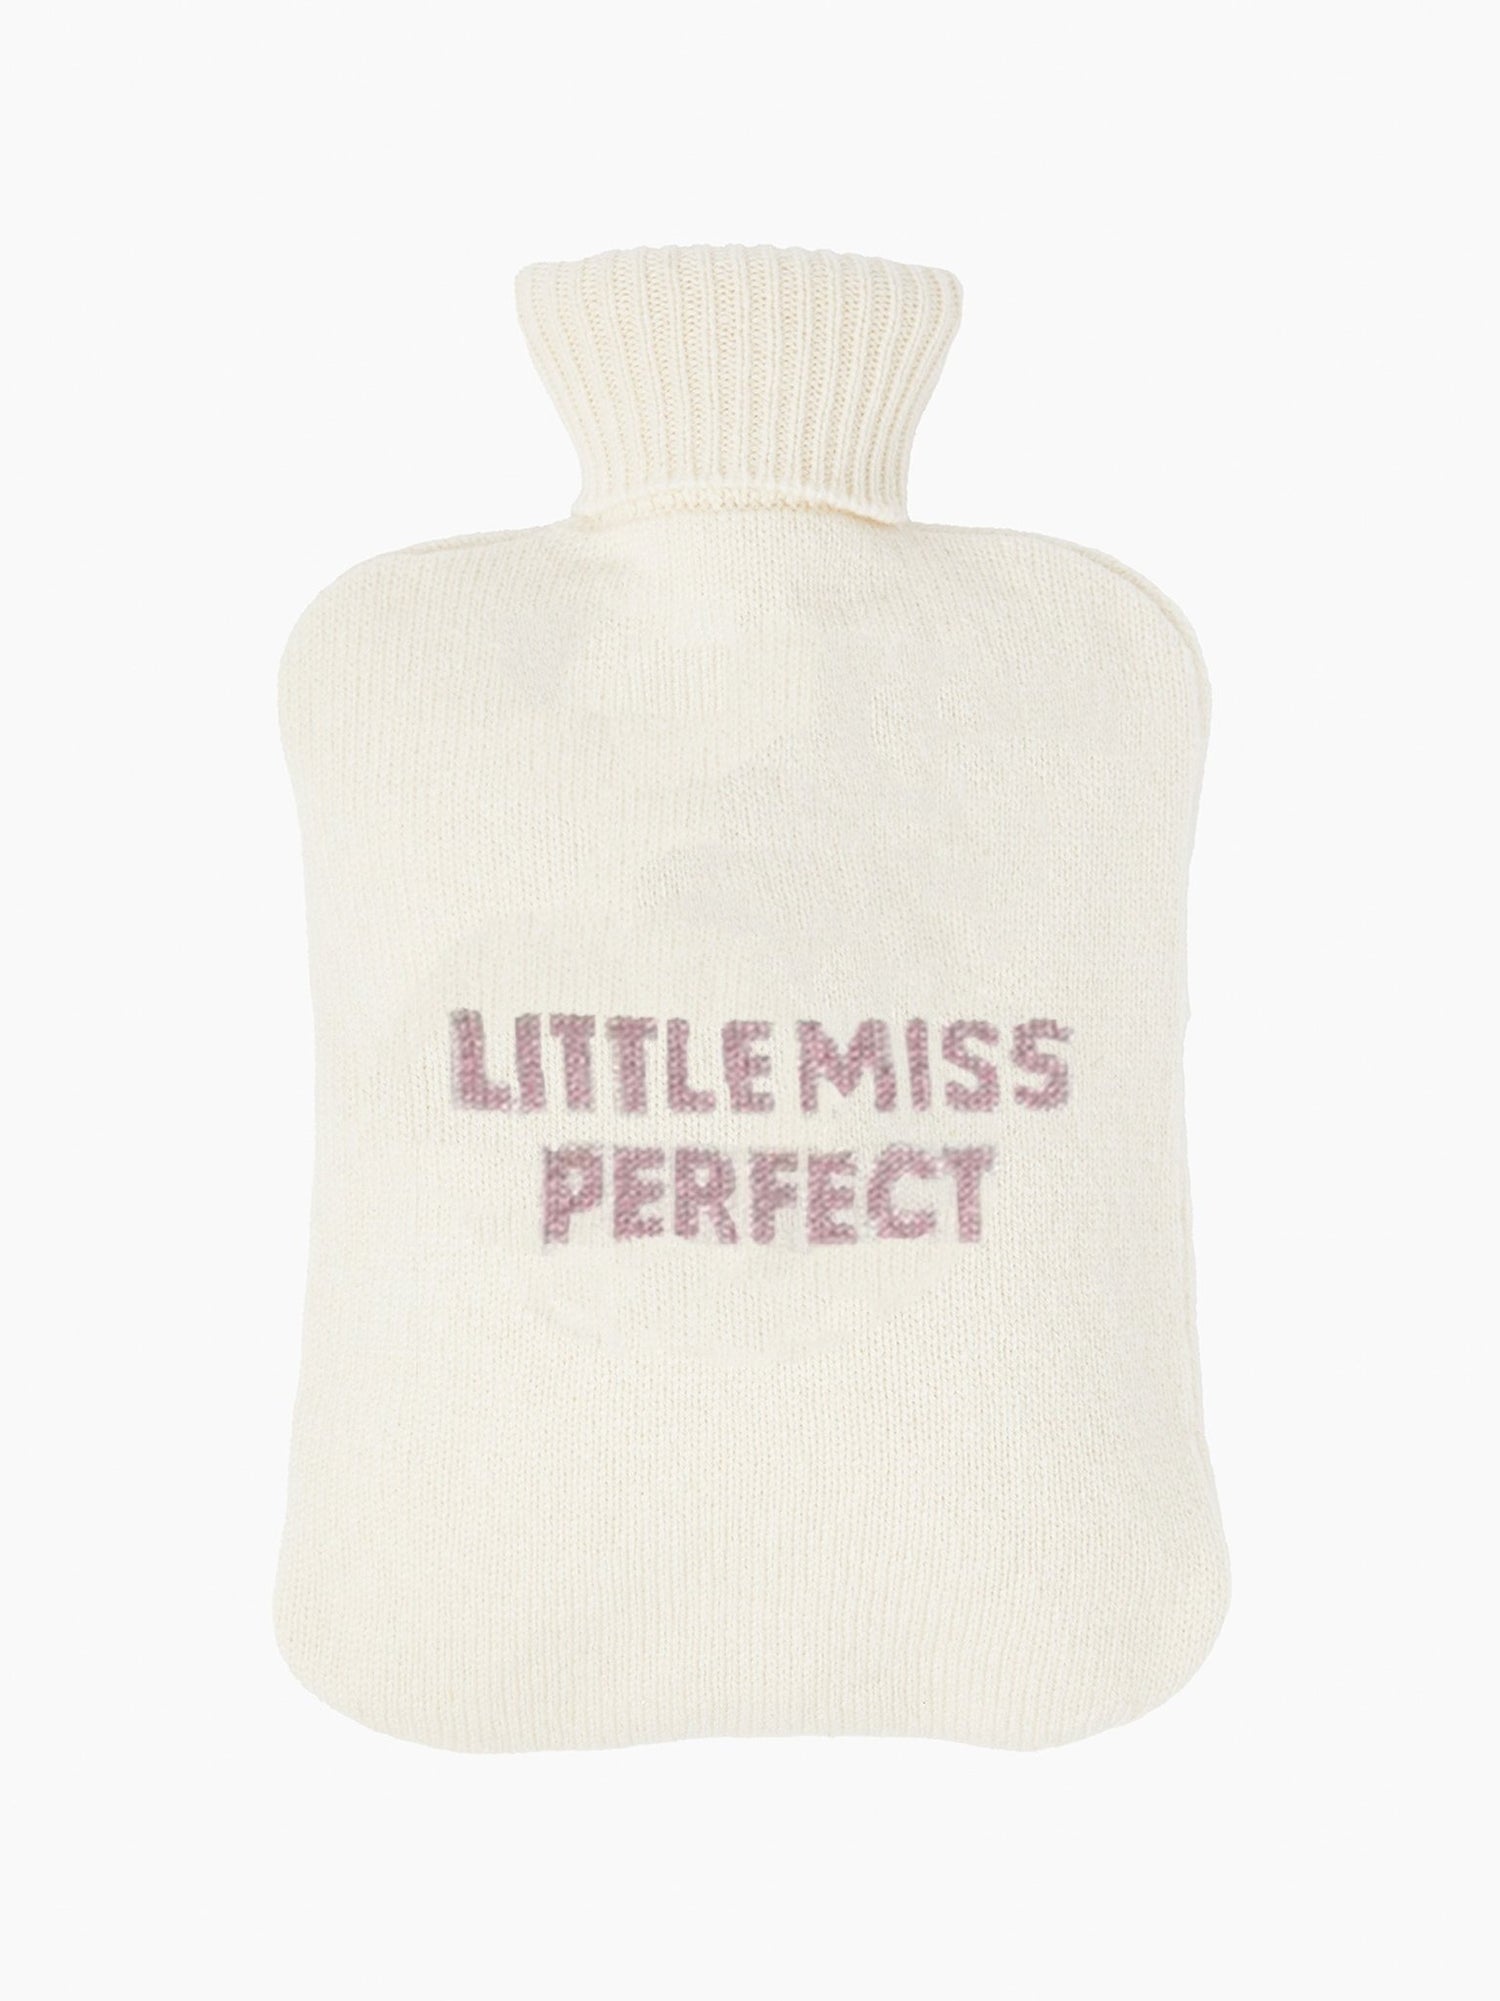 Hot Water Bottle - Little Miss Perfect